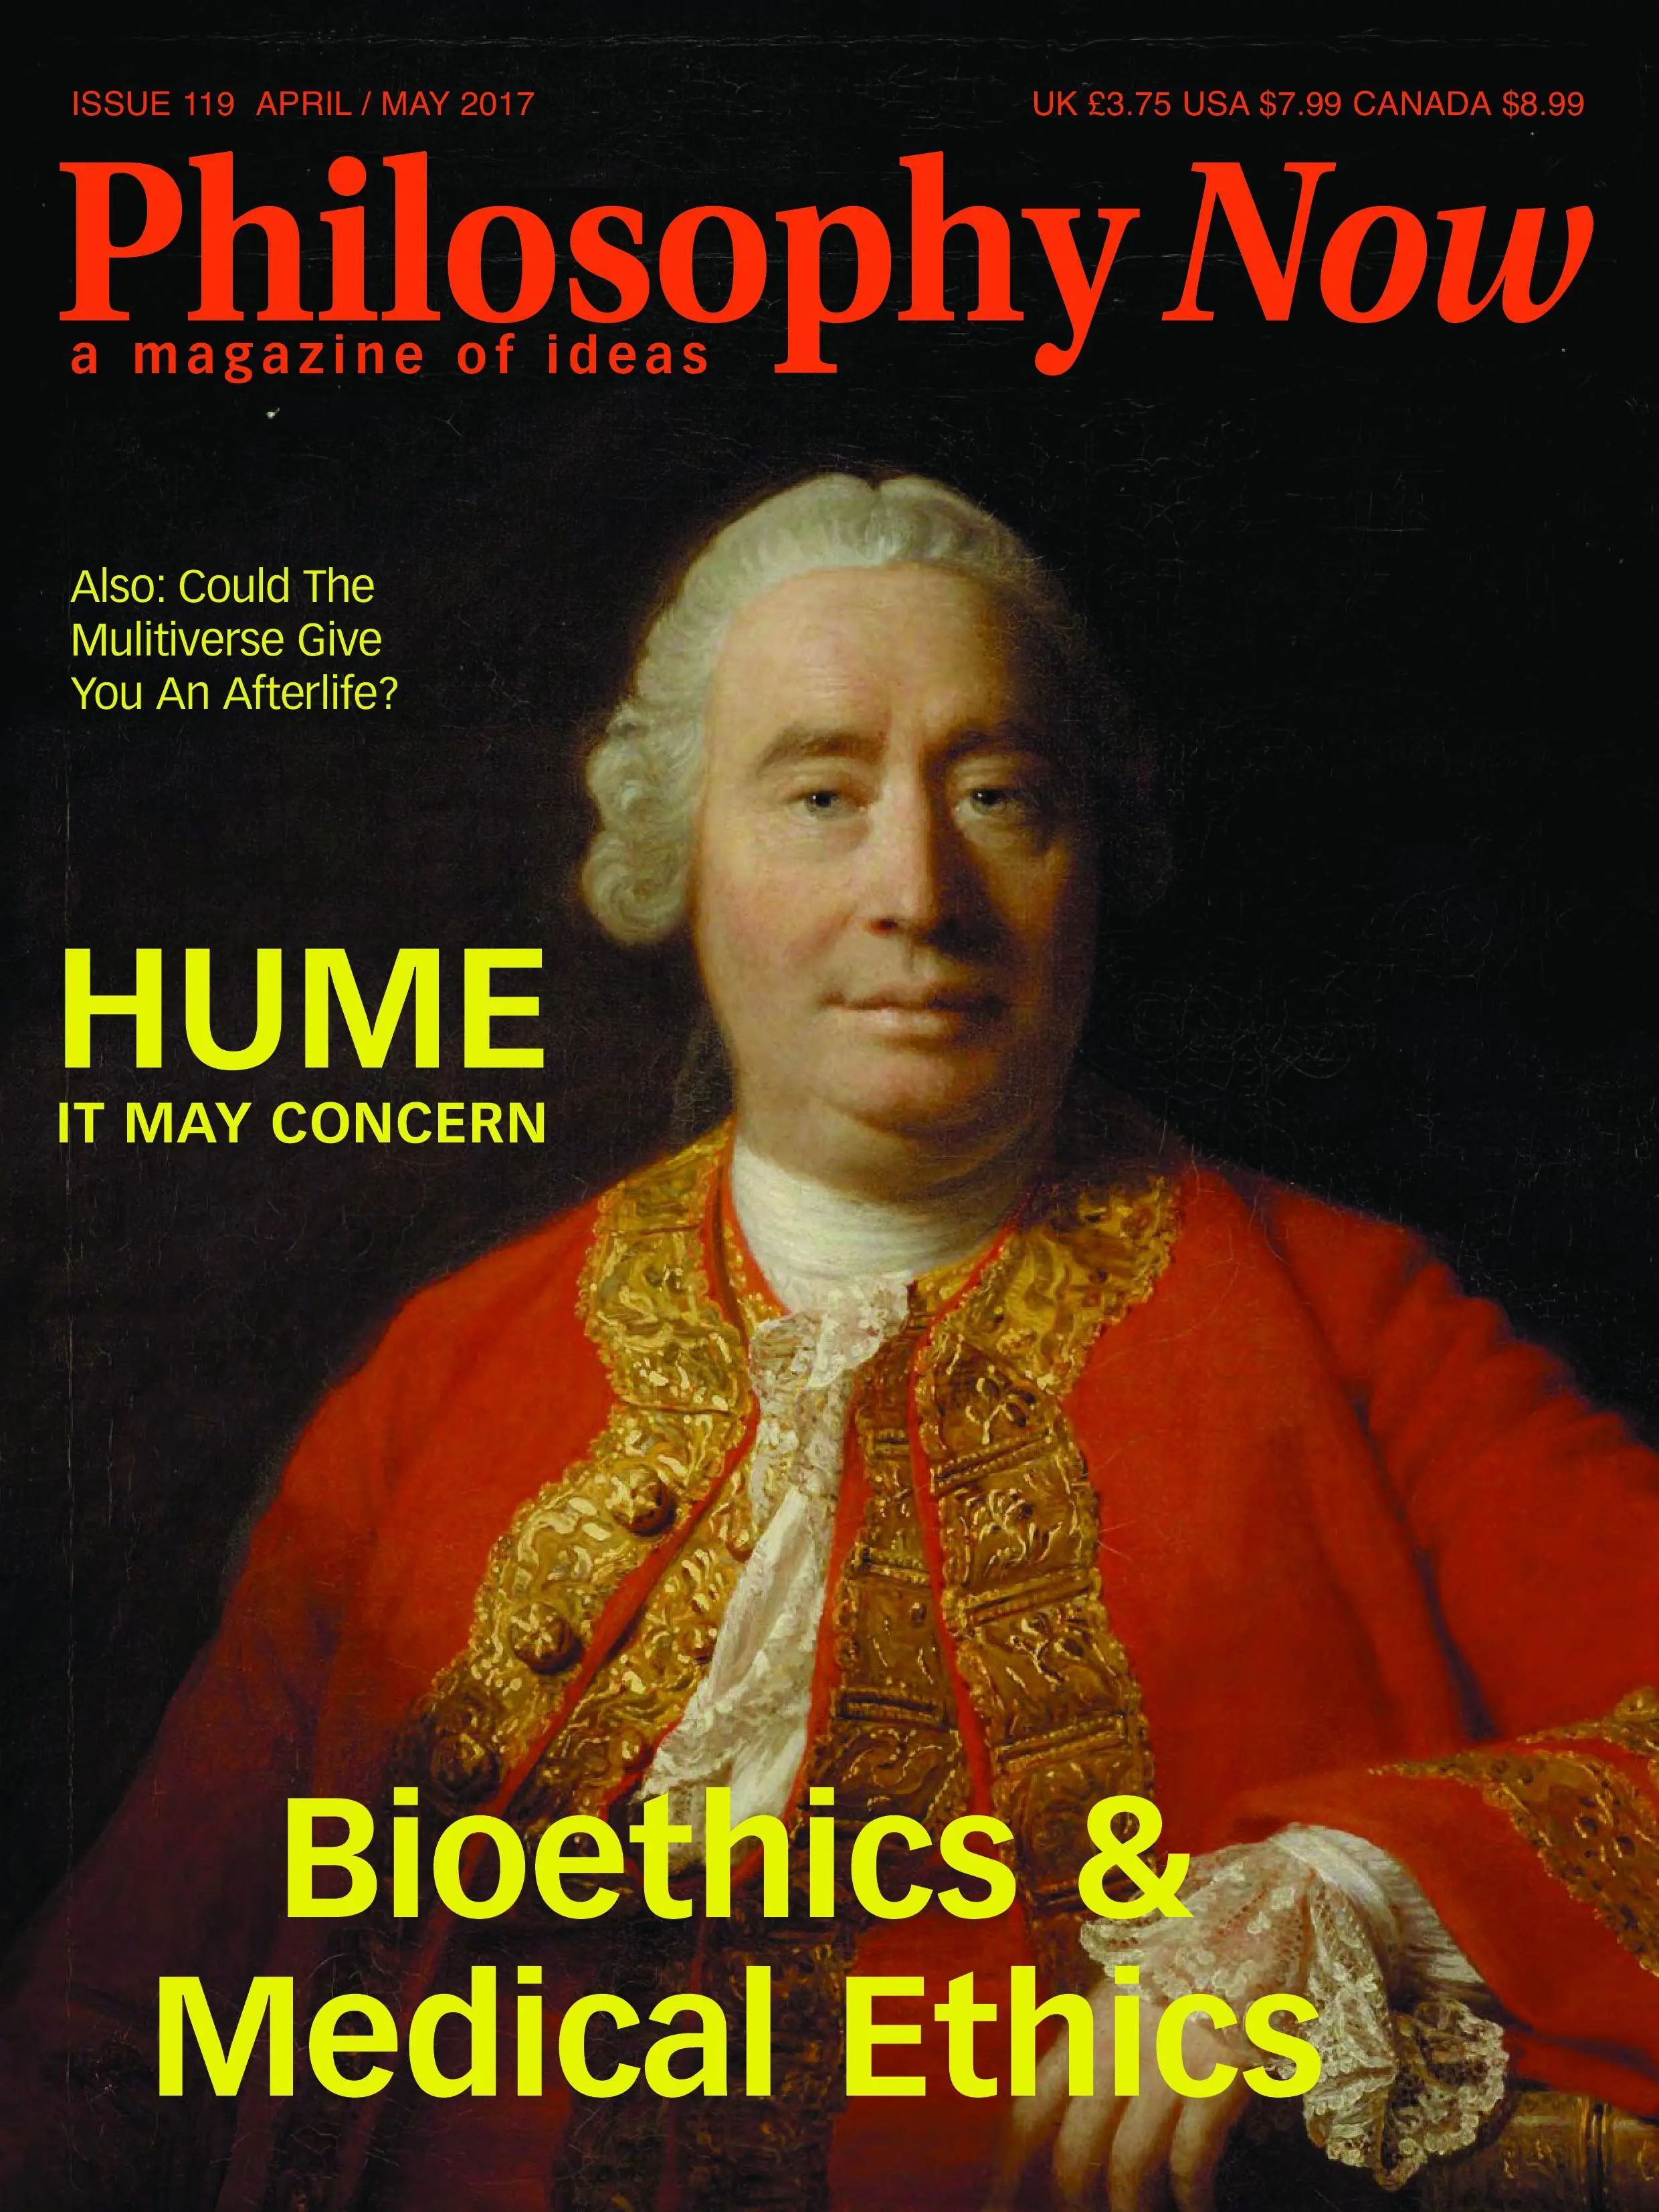 Now magazine. Журнал Philosophy Now. Philosophy and Now.